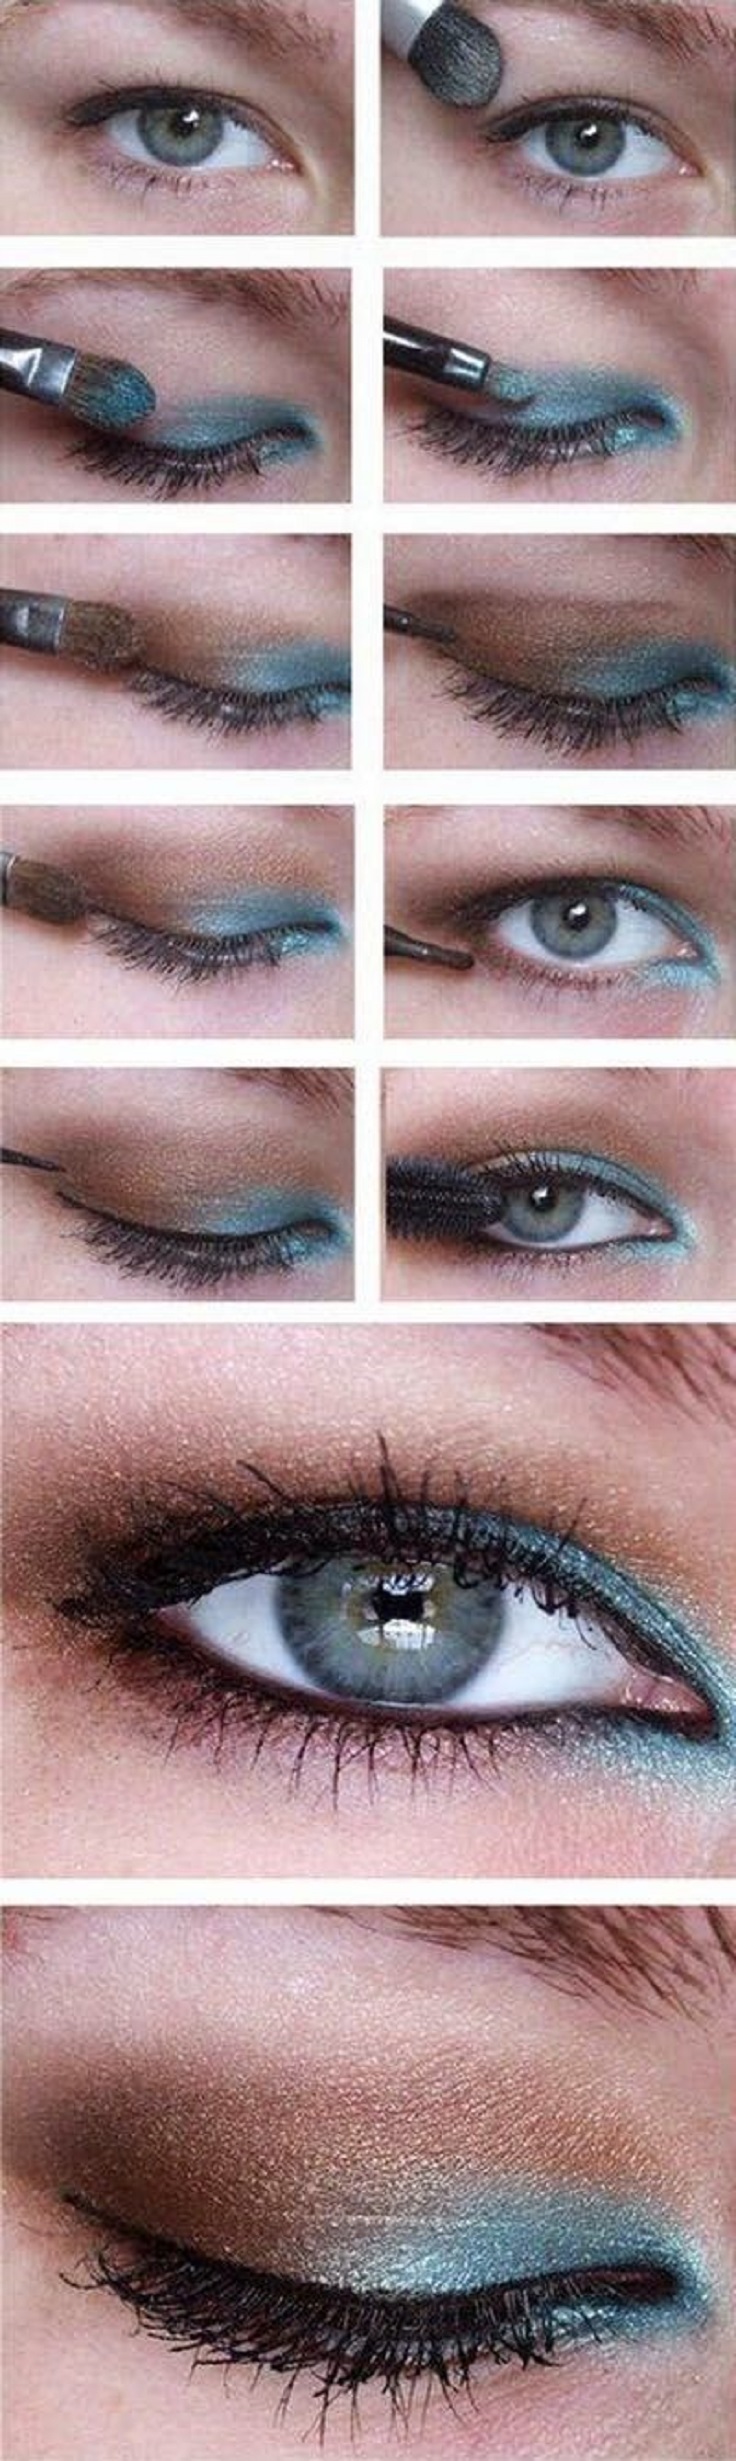 Top 10 Simple Makeup Tutorials For Hooded Eyes - Top Inspired